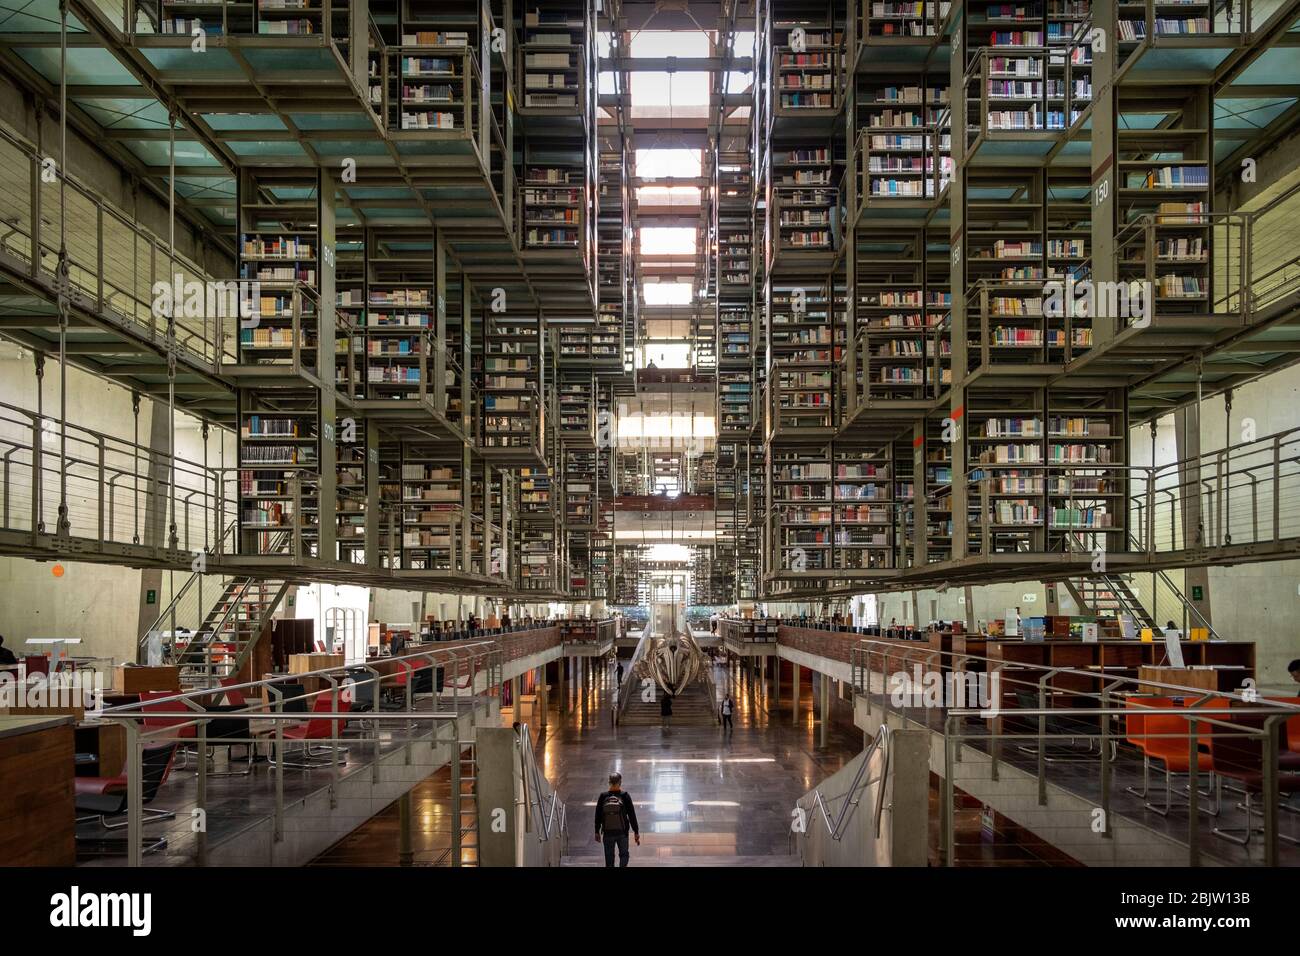 Riesige Bibliothek (38,000 Quadratmeter oder 409,000 Quadratfuß) Biblioteca Vasconcelos Mexiko-Stadt, Mexiko Stockfoto